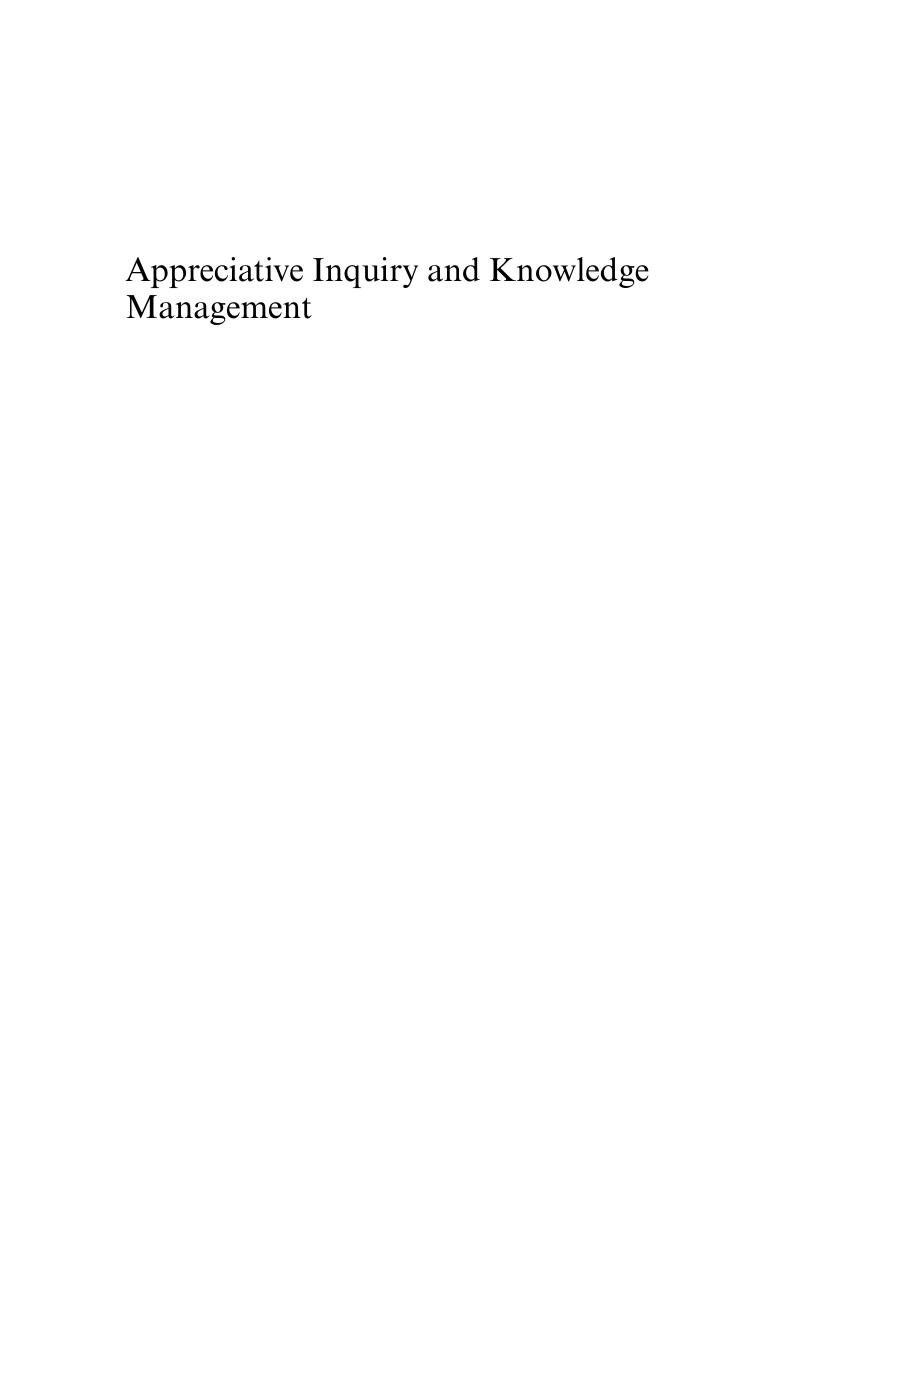 Appreciative Inquiry and Knowledge Management  A Social Constructionist Perspective-Edward Elgar Pub 2007